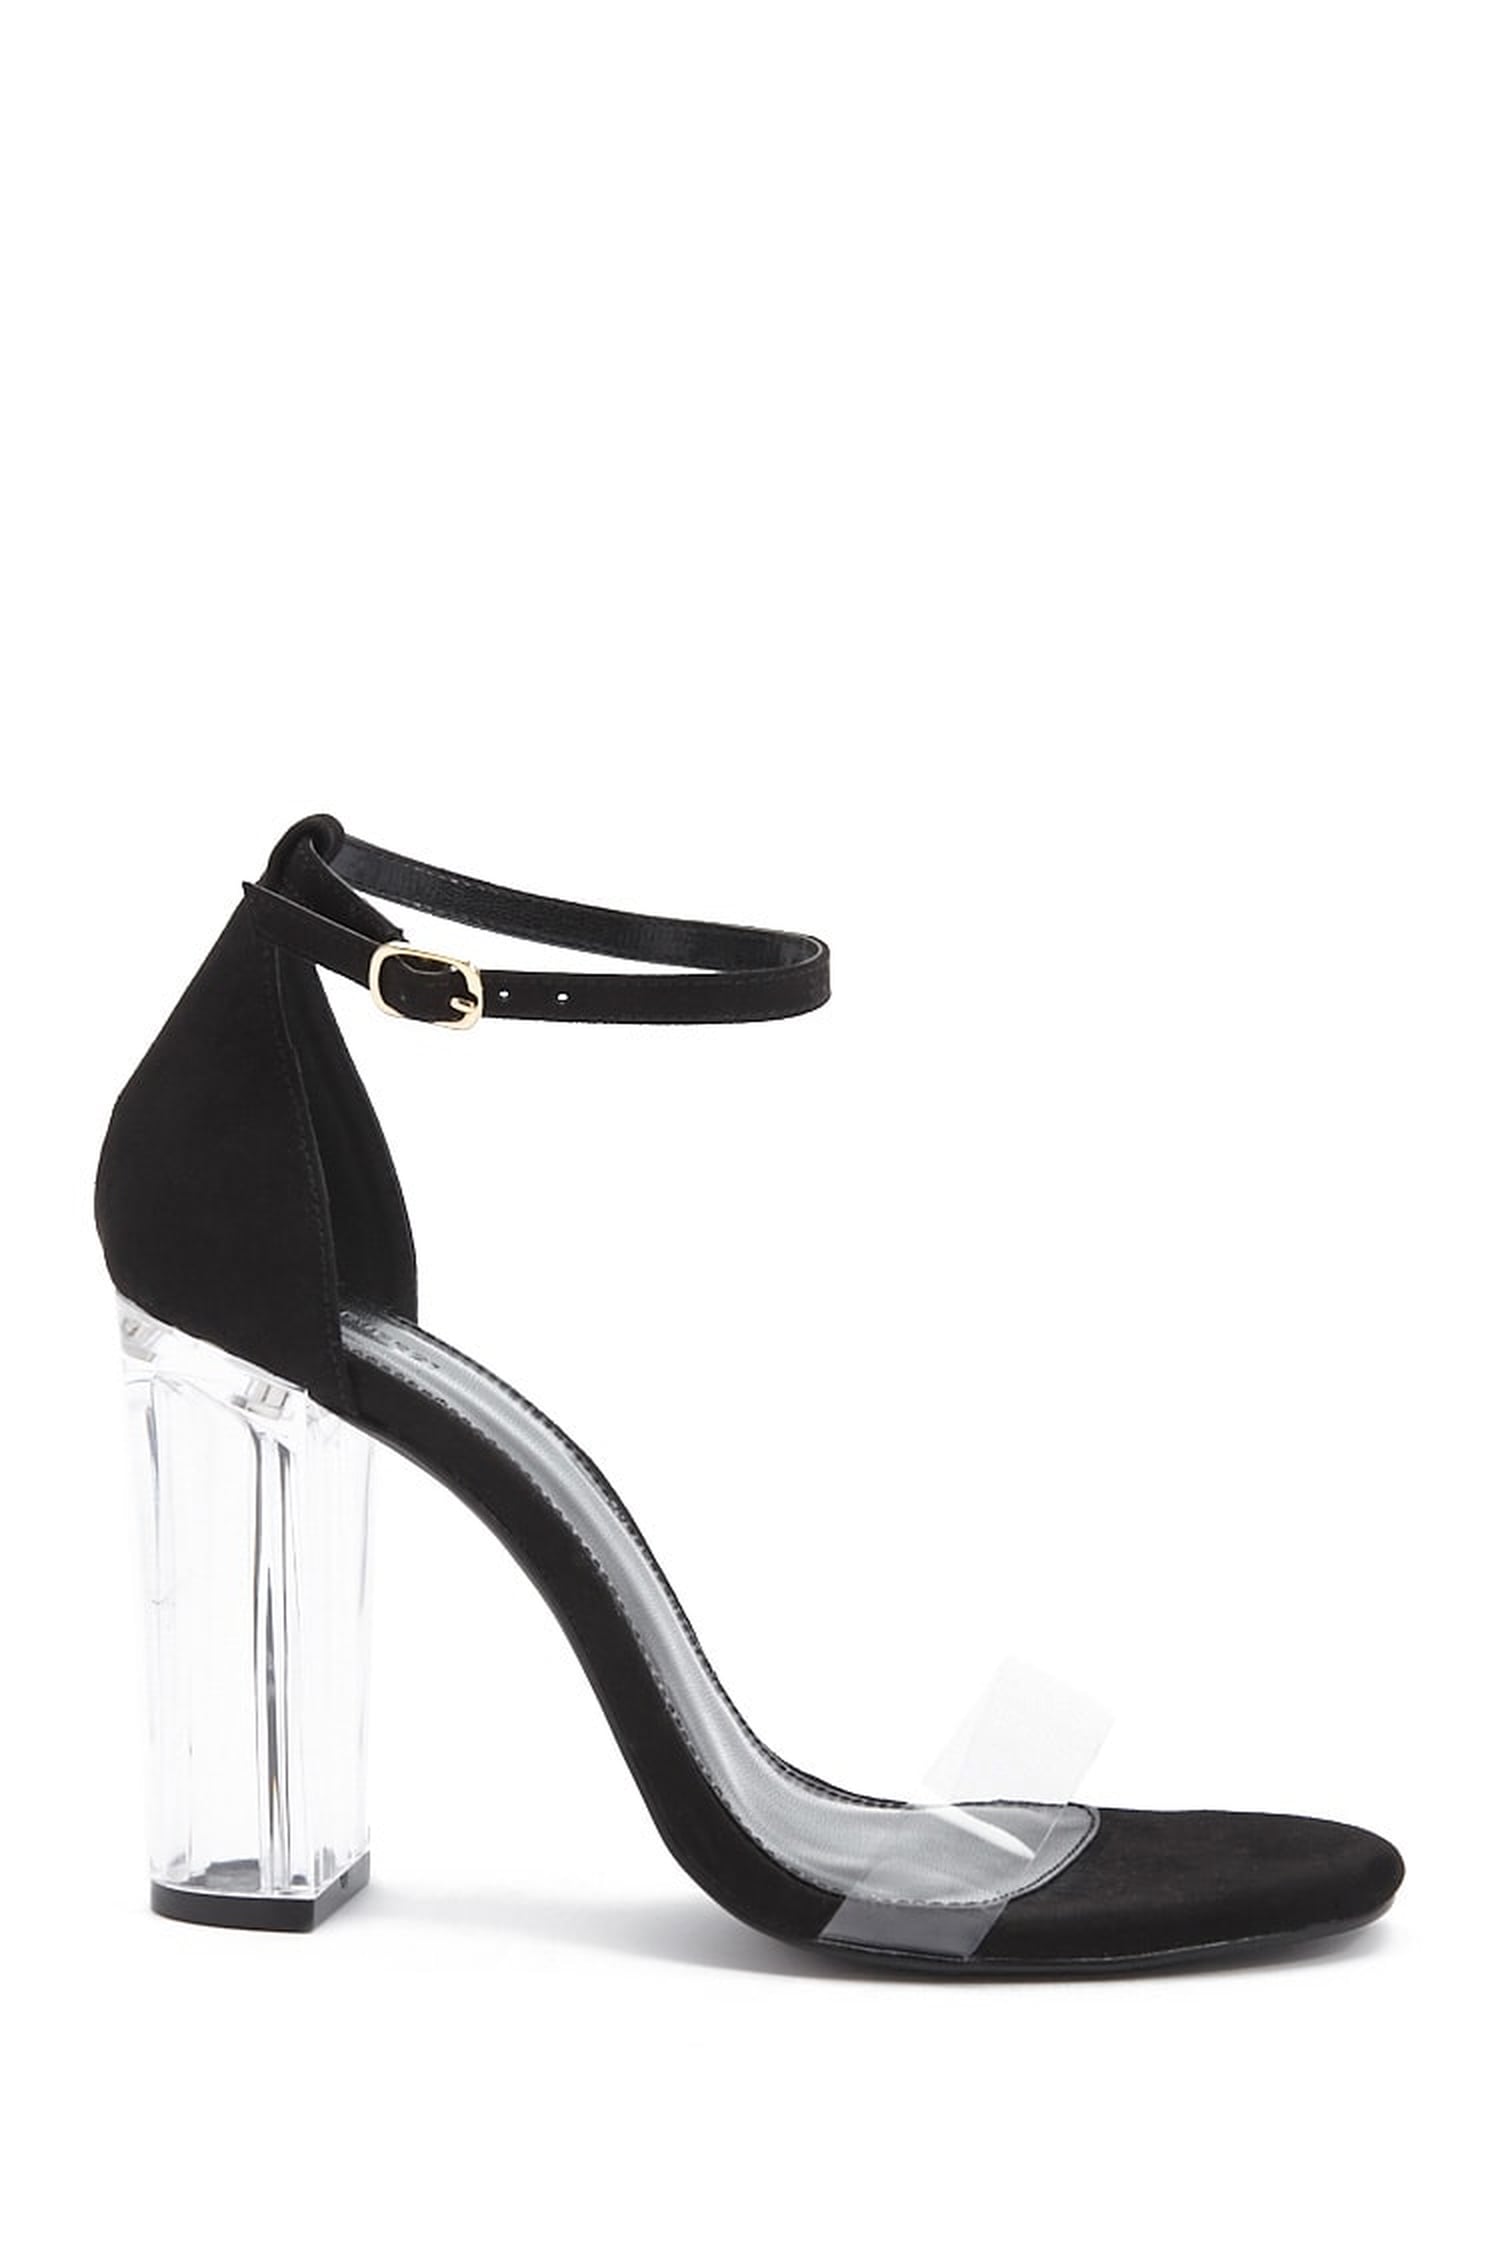 Jennifer Lopez Plaid Dress and Platform Heels | POPSUGAR Fashion